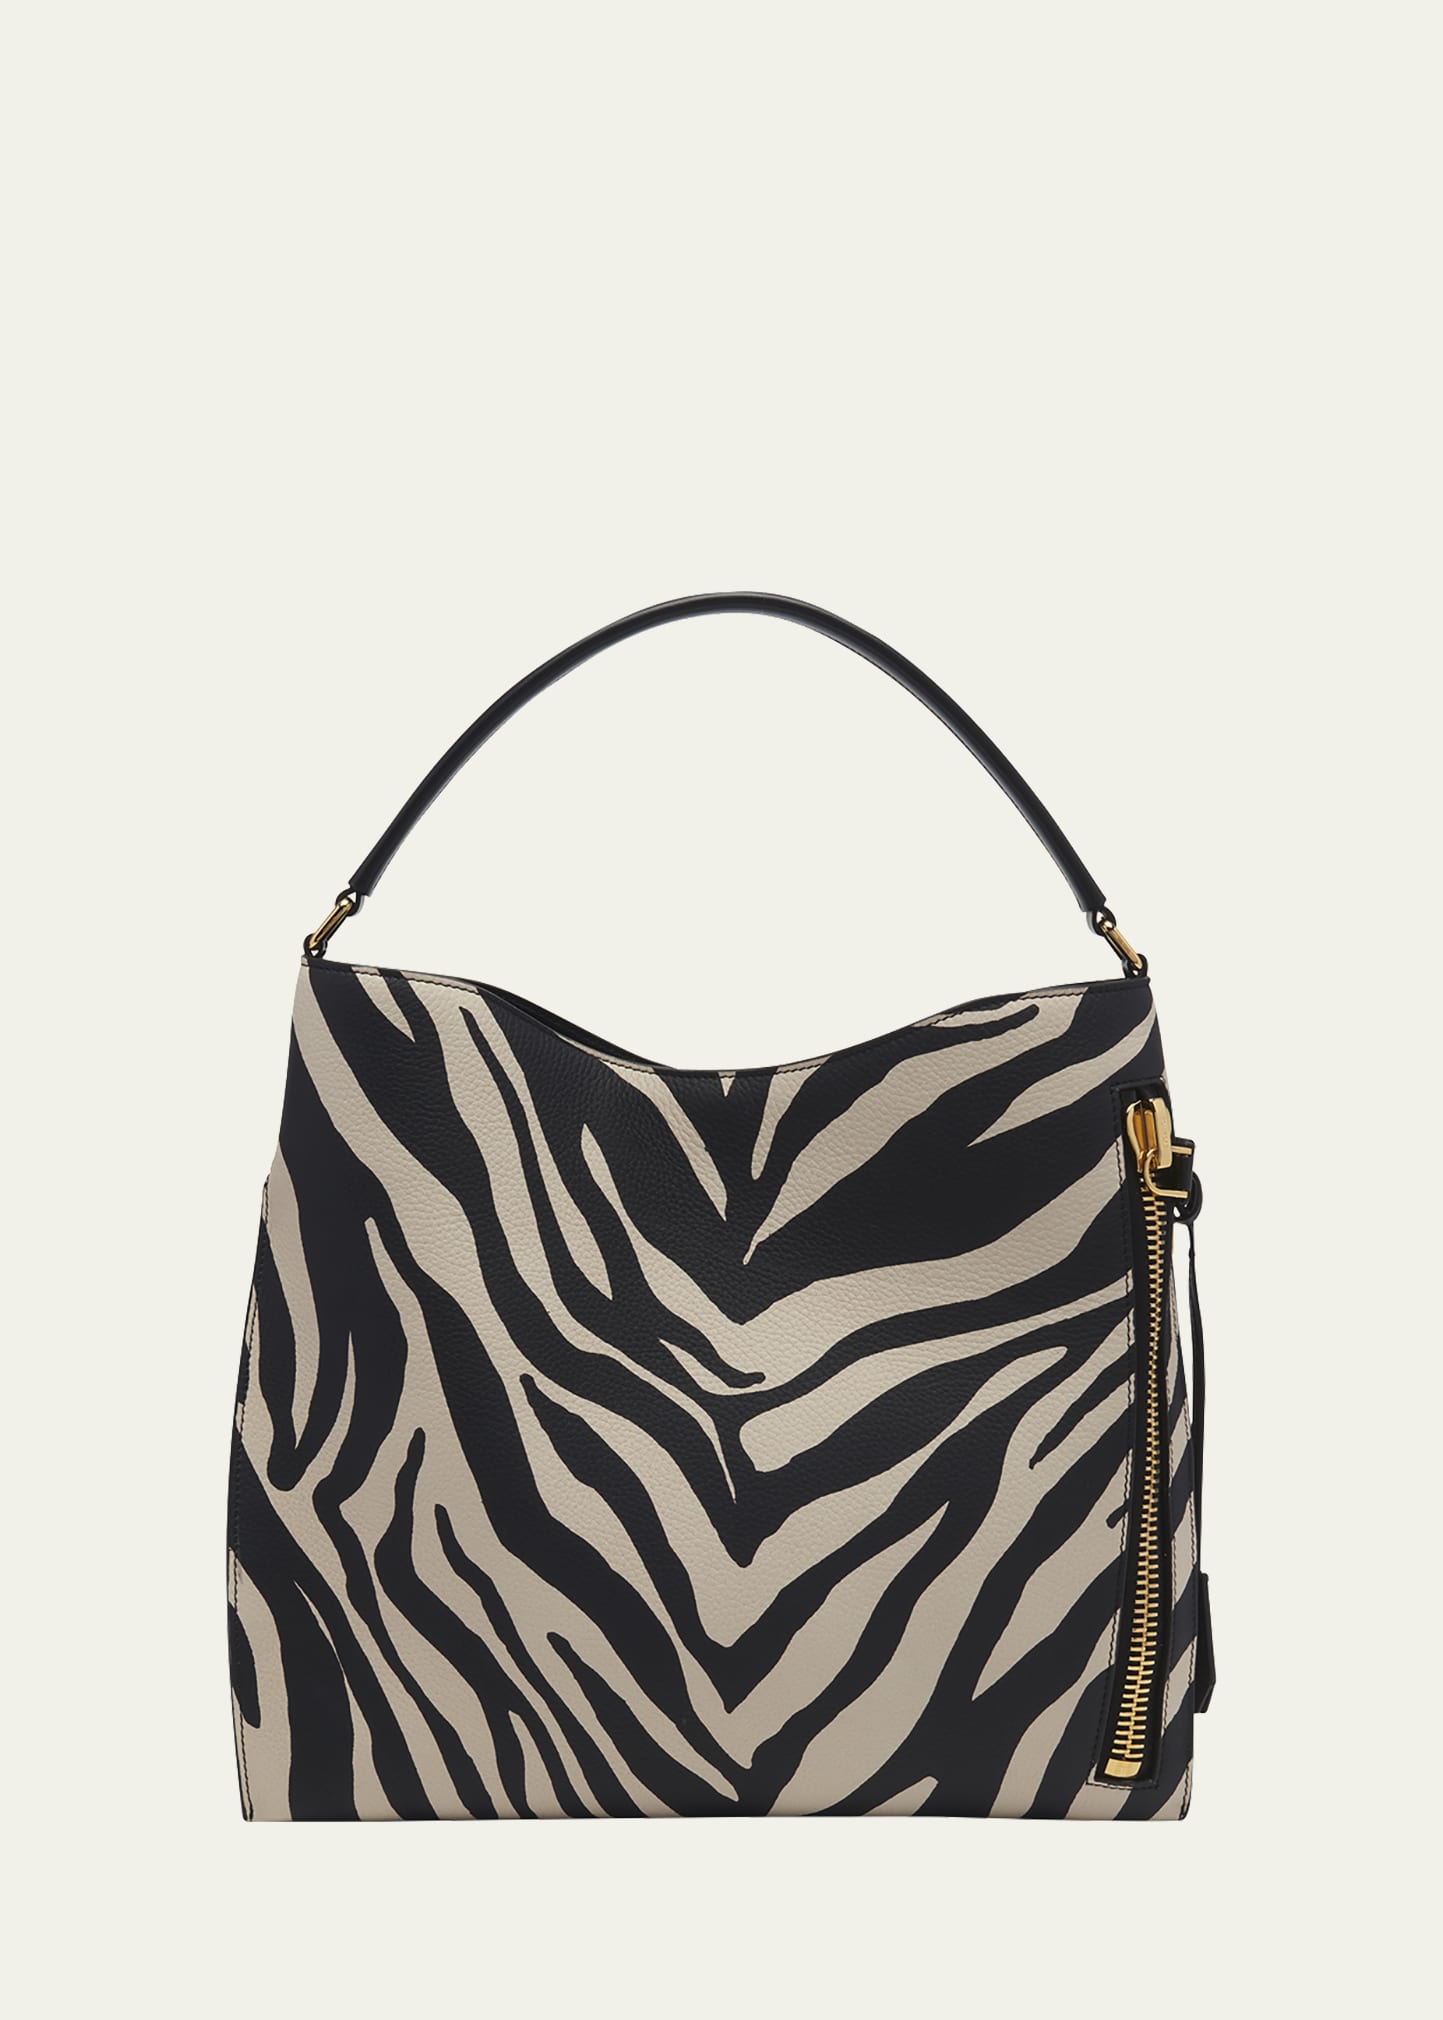 TOM FORD Alix Small Zebra-Print Leather Hobo Bag - Bergdorf Goodman